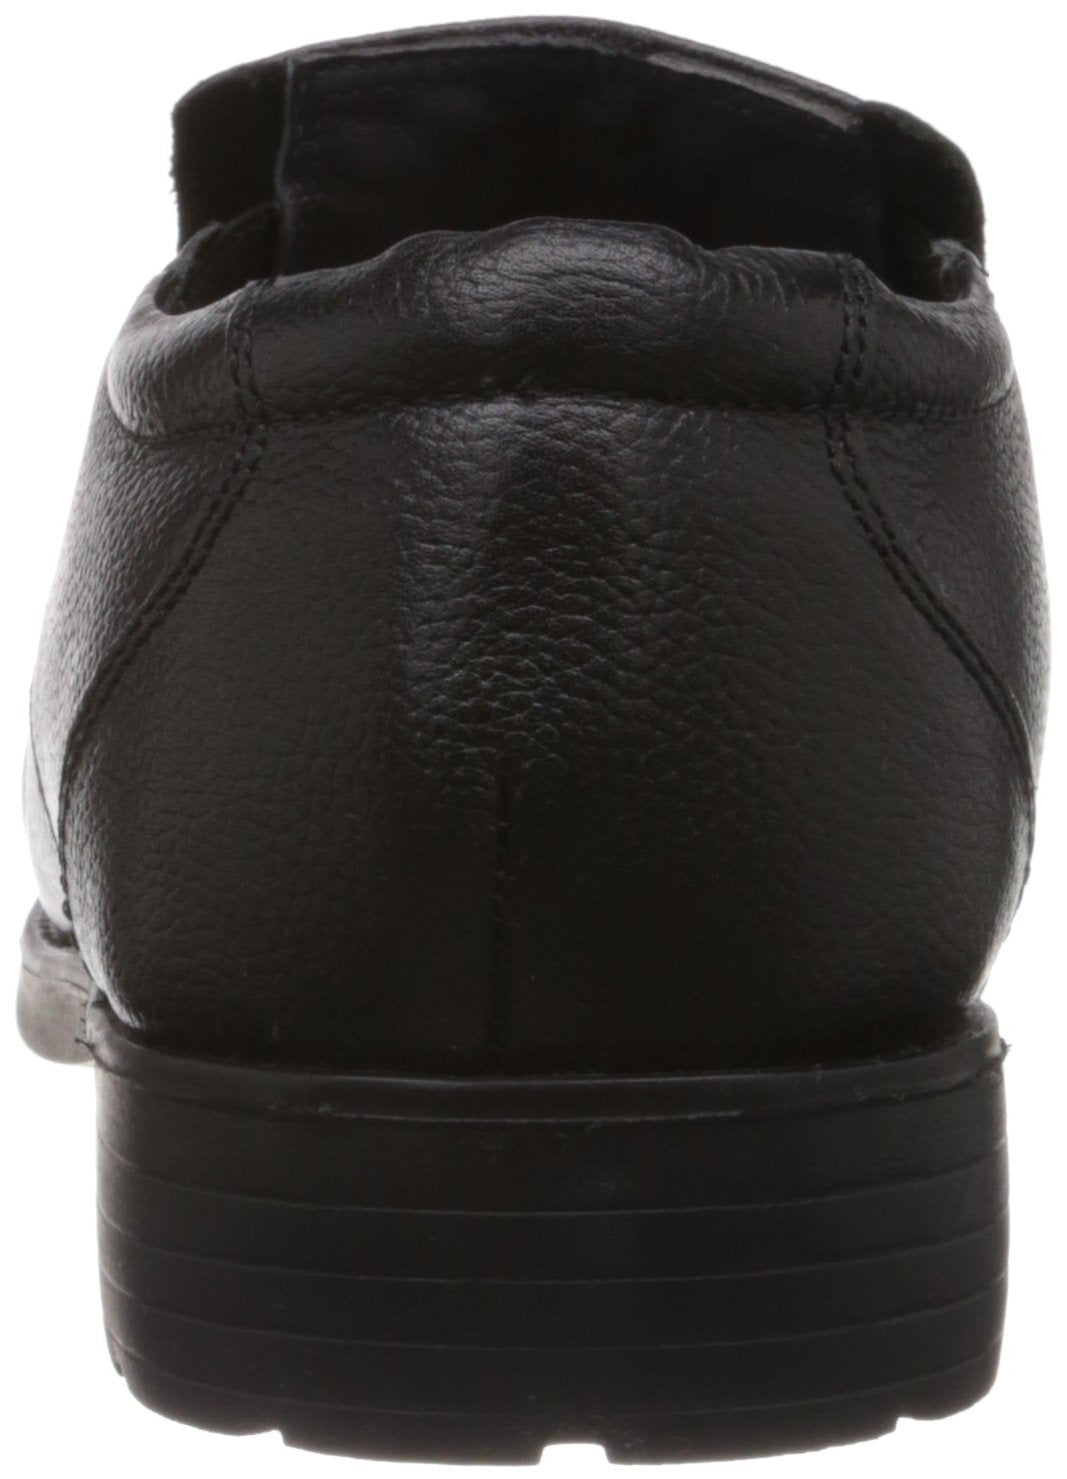 Hush Puppies mens MOCCA ZERO G Black Sneaker - 8 UK (8546624)